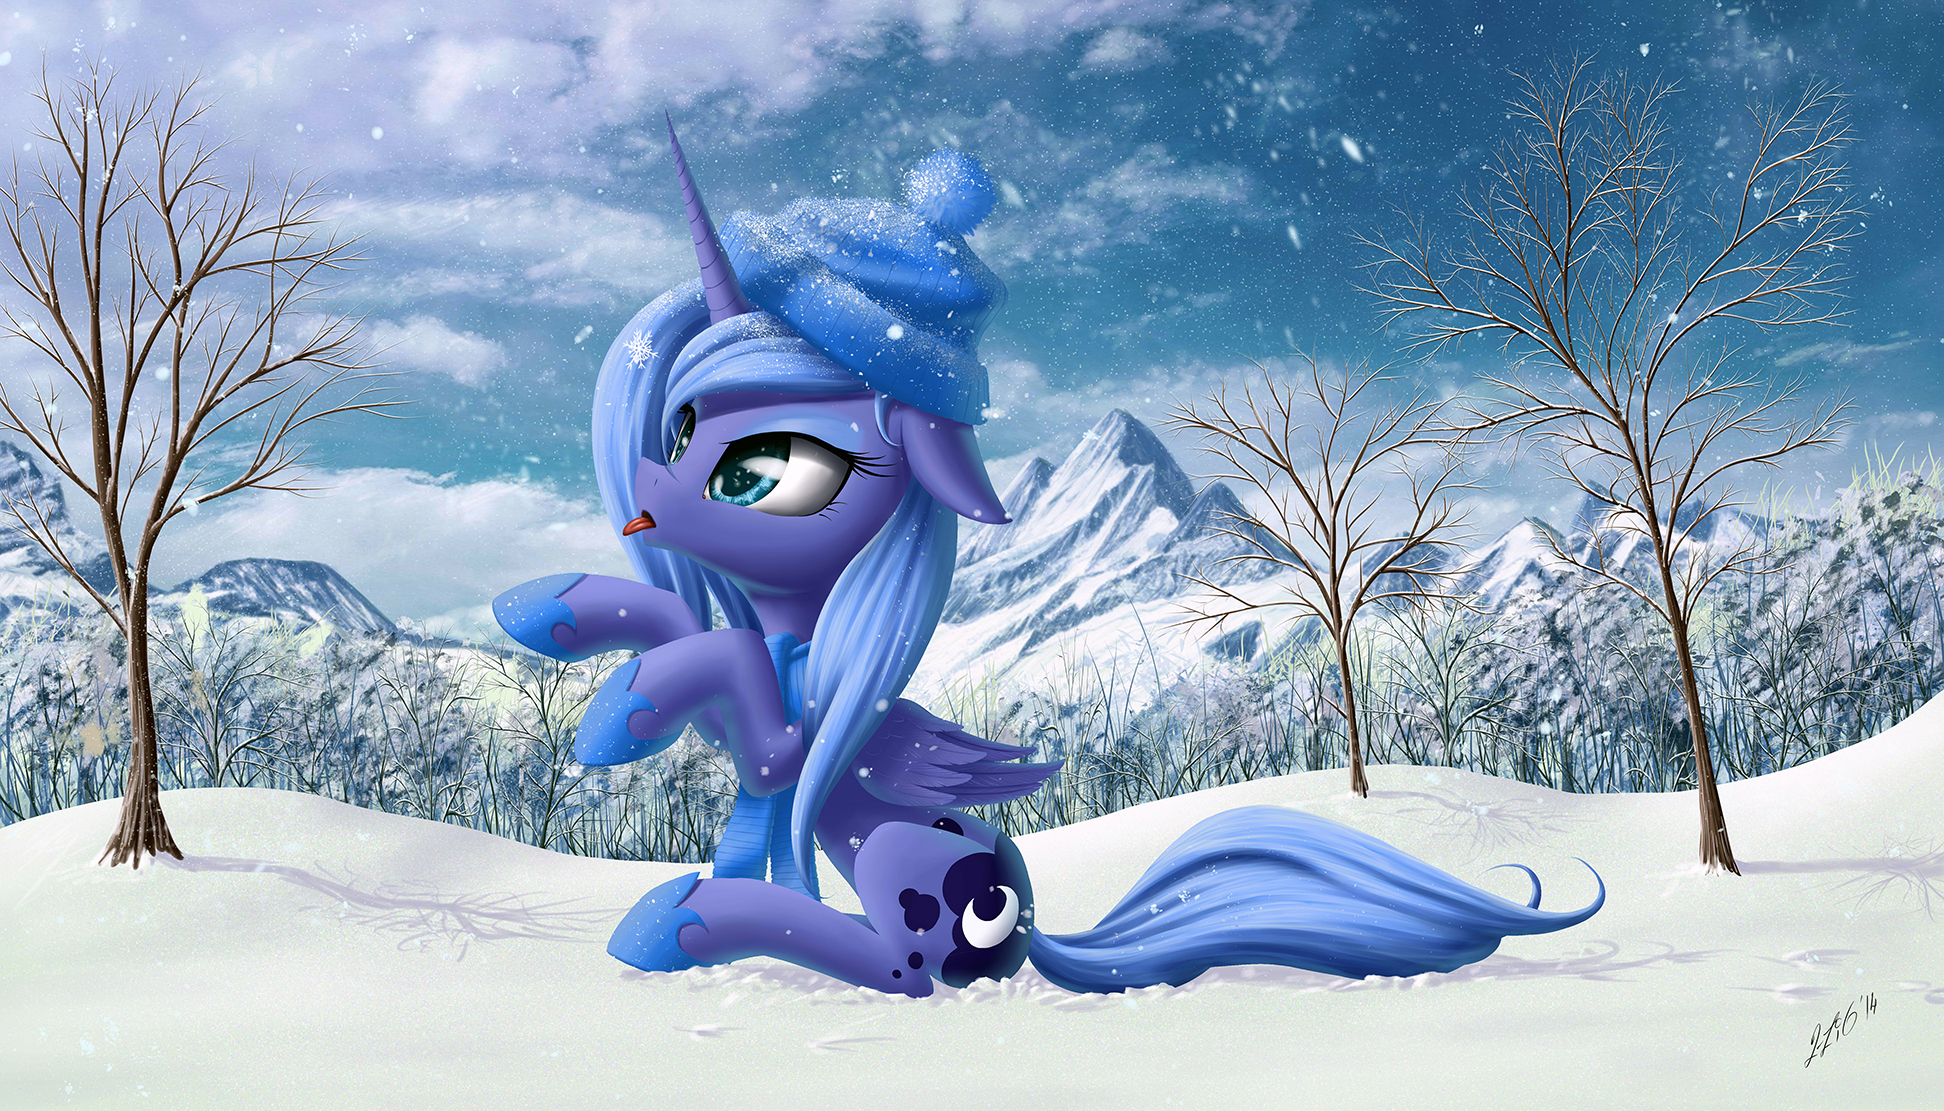 Princess Luna ebashit snow by ZiG-WORD